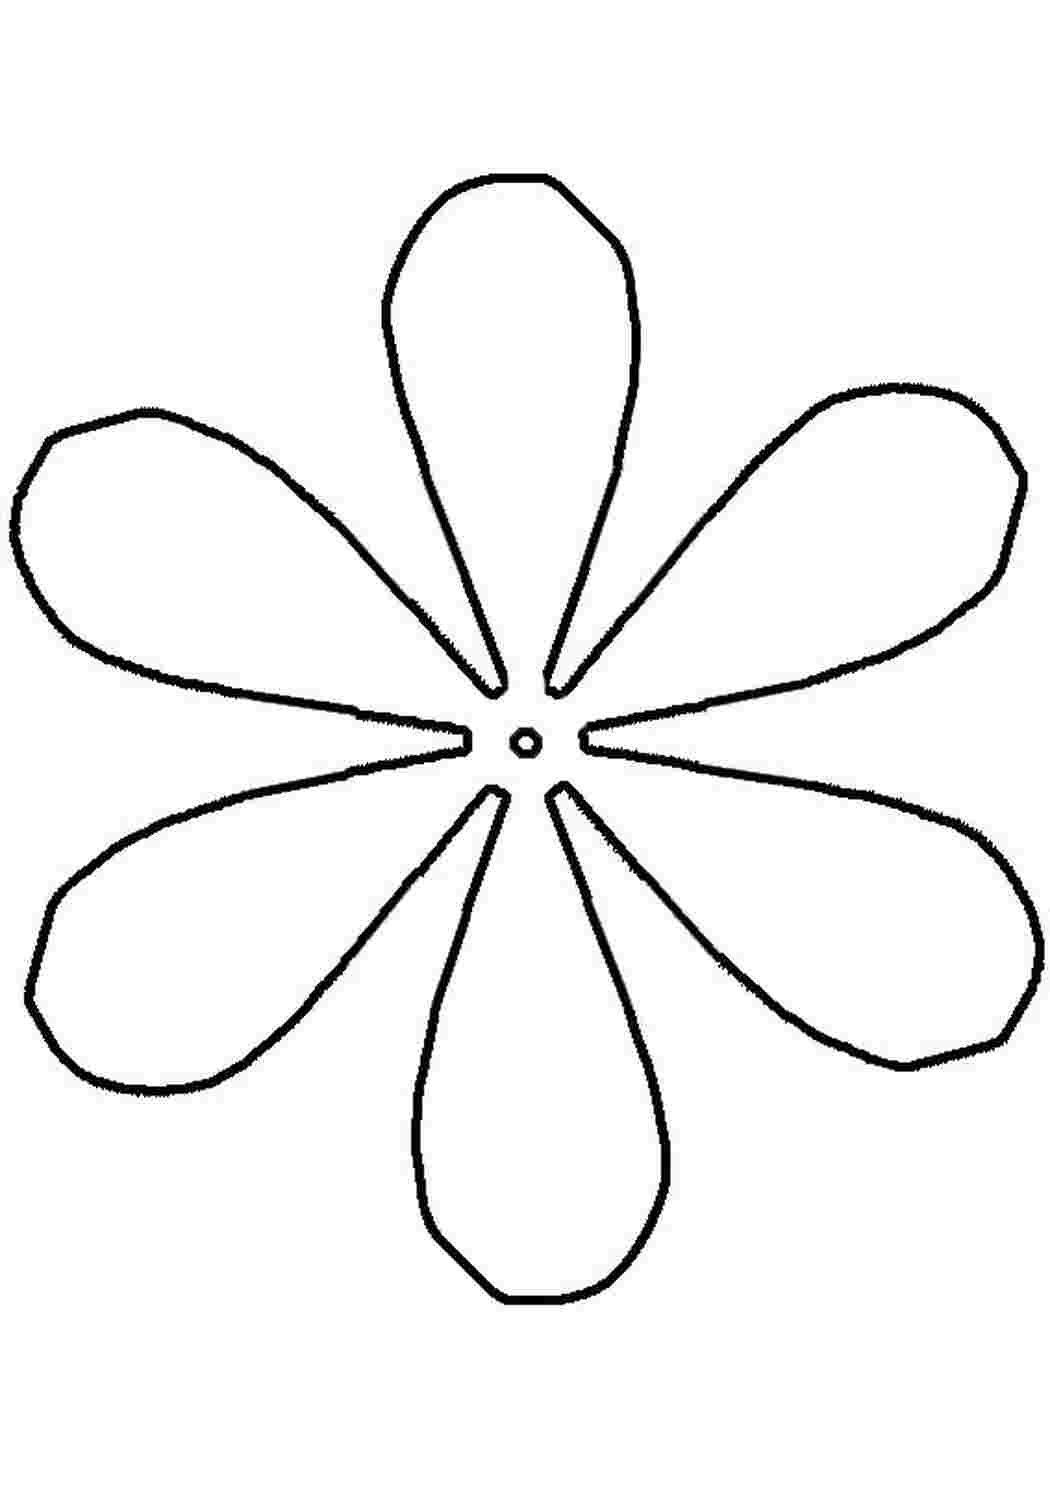 Трафарет цветка с 5 лепестками